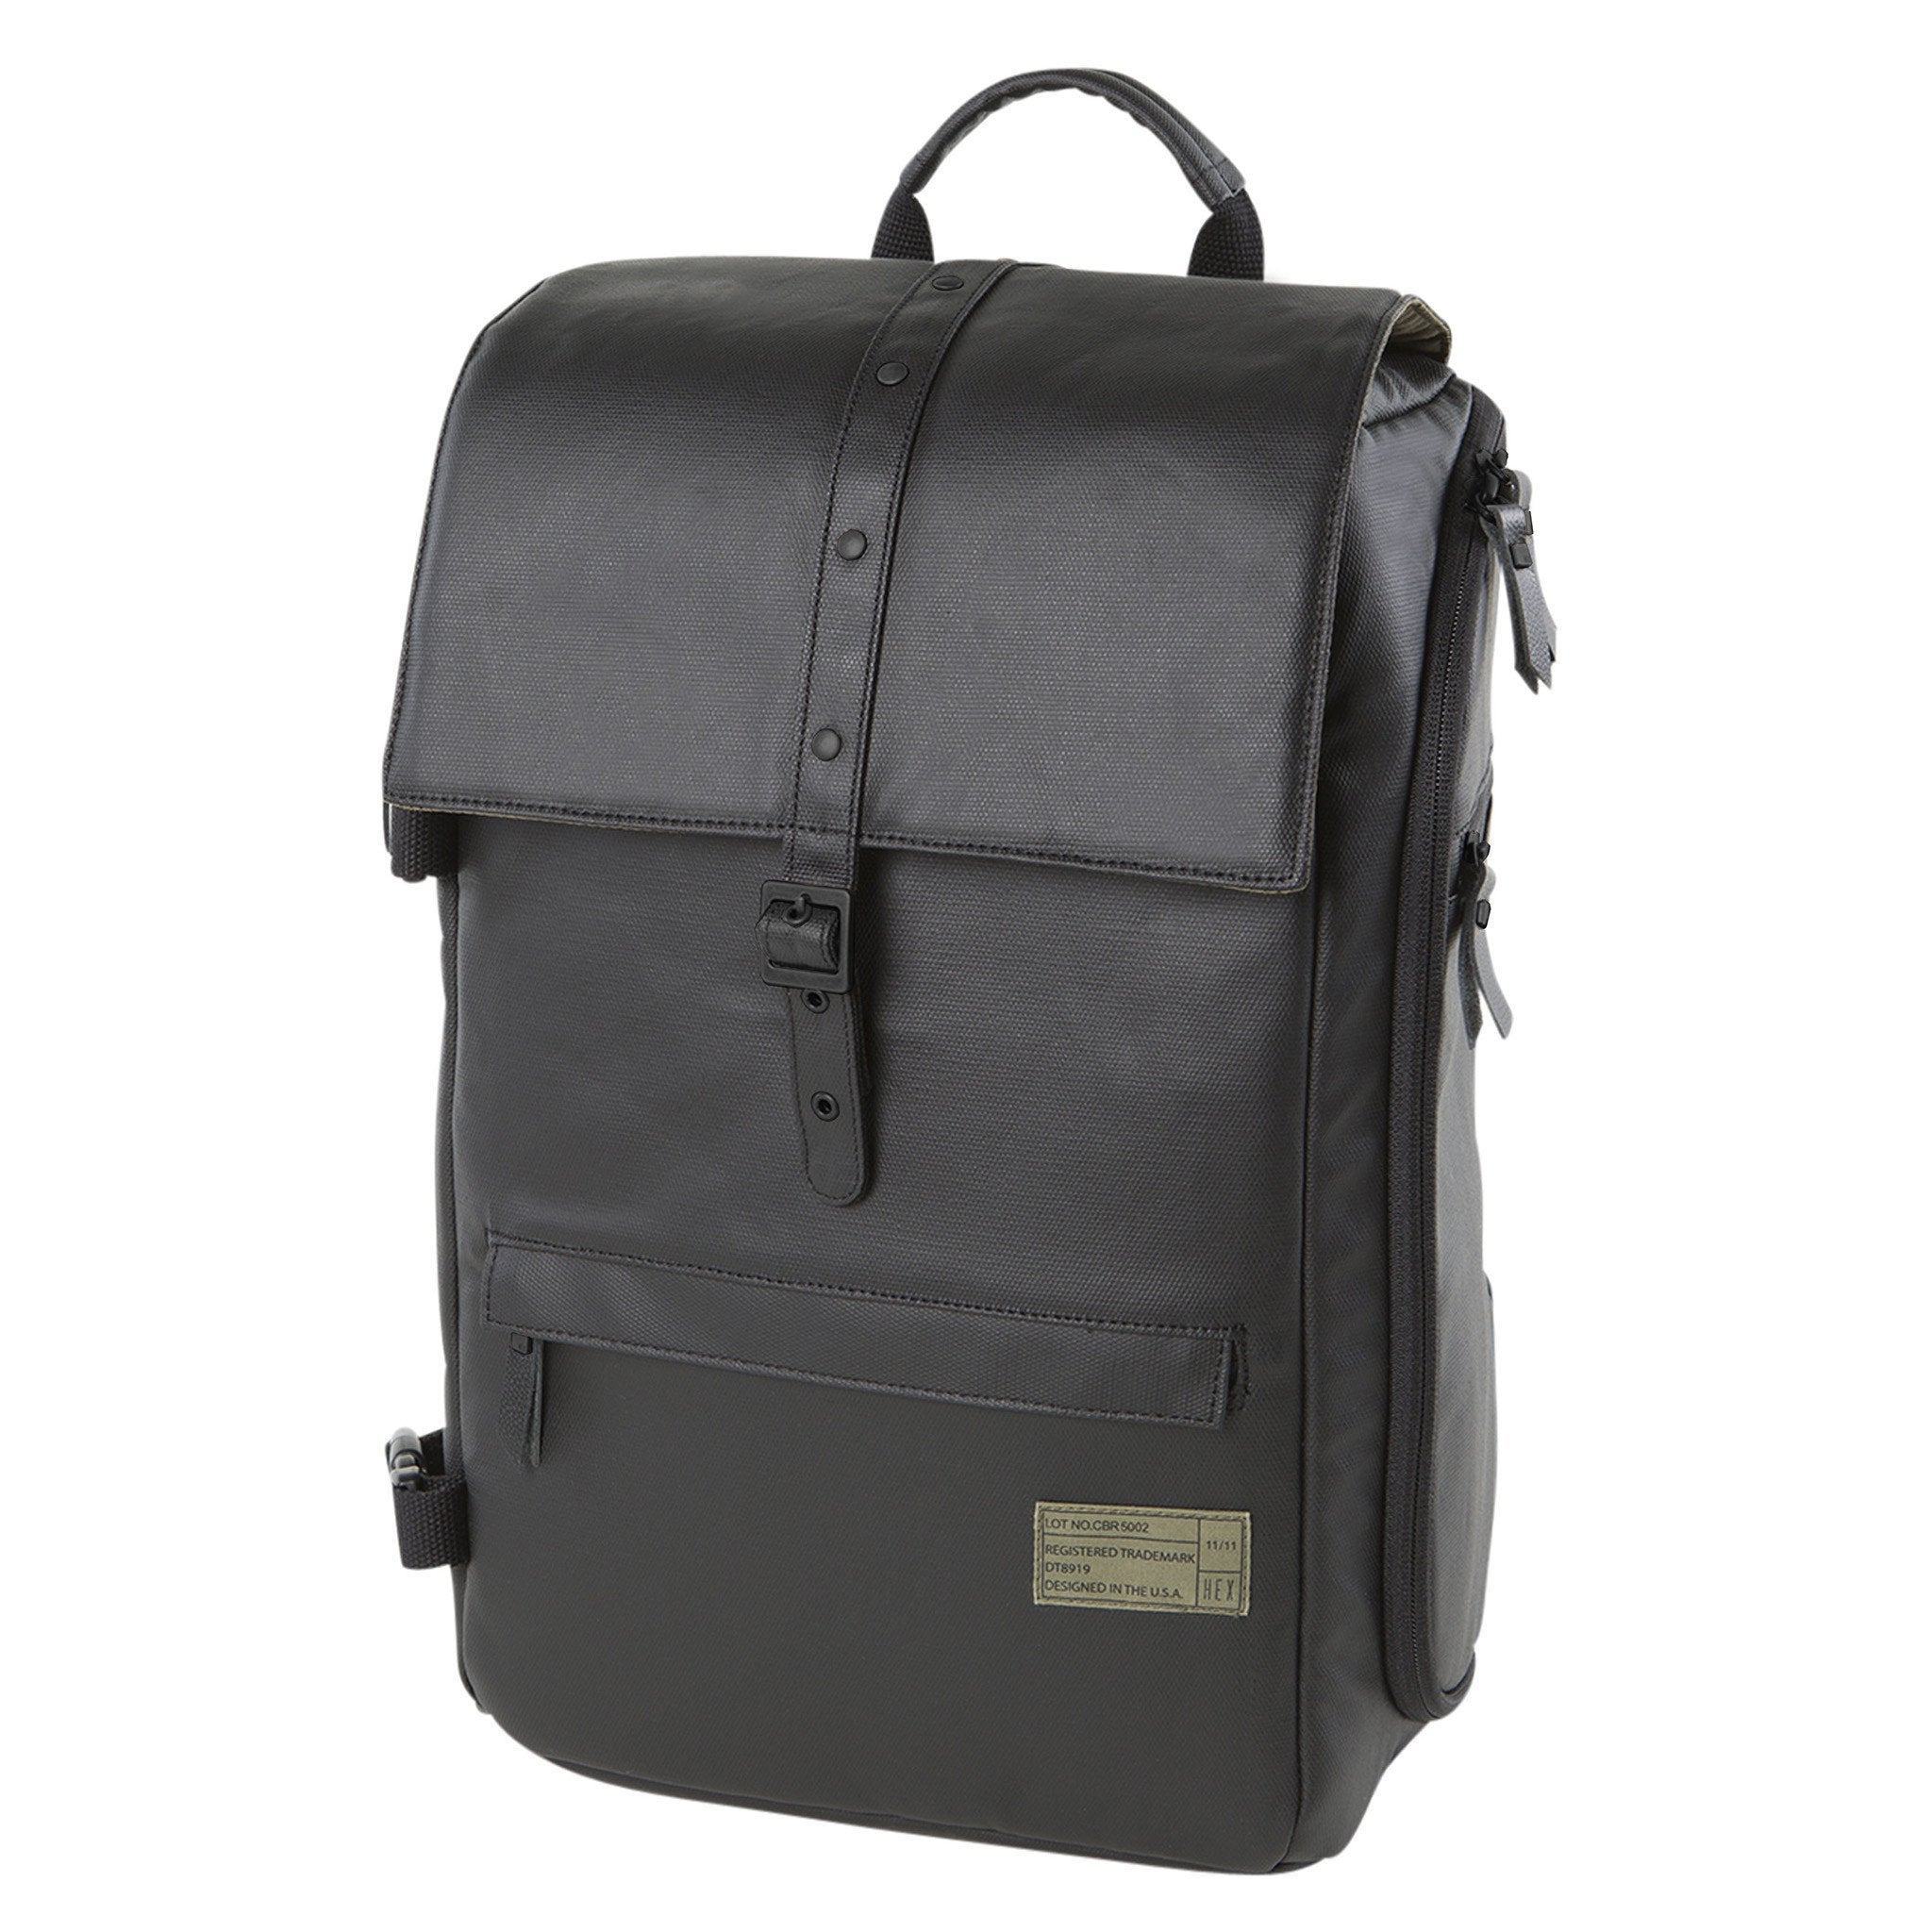 Hex DSLR Sling Bag (Black) - Backpackers Gallery backpacks bag